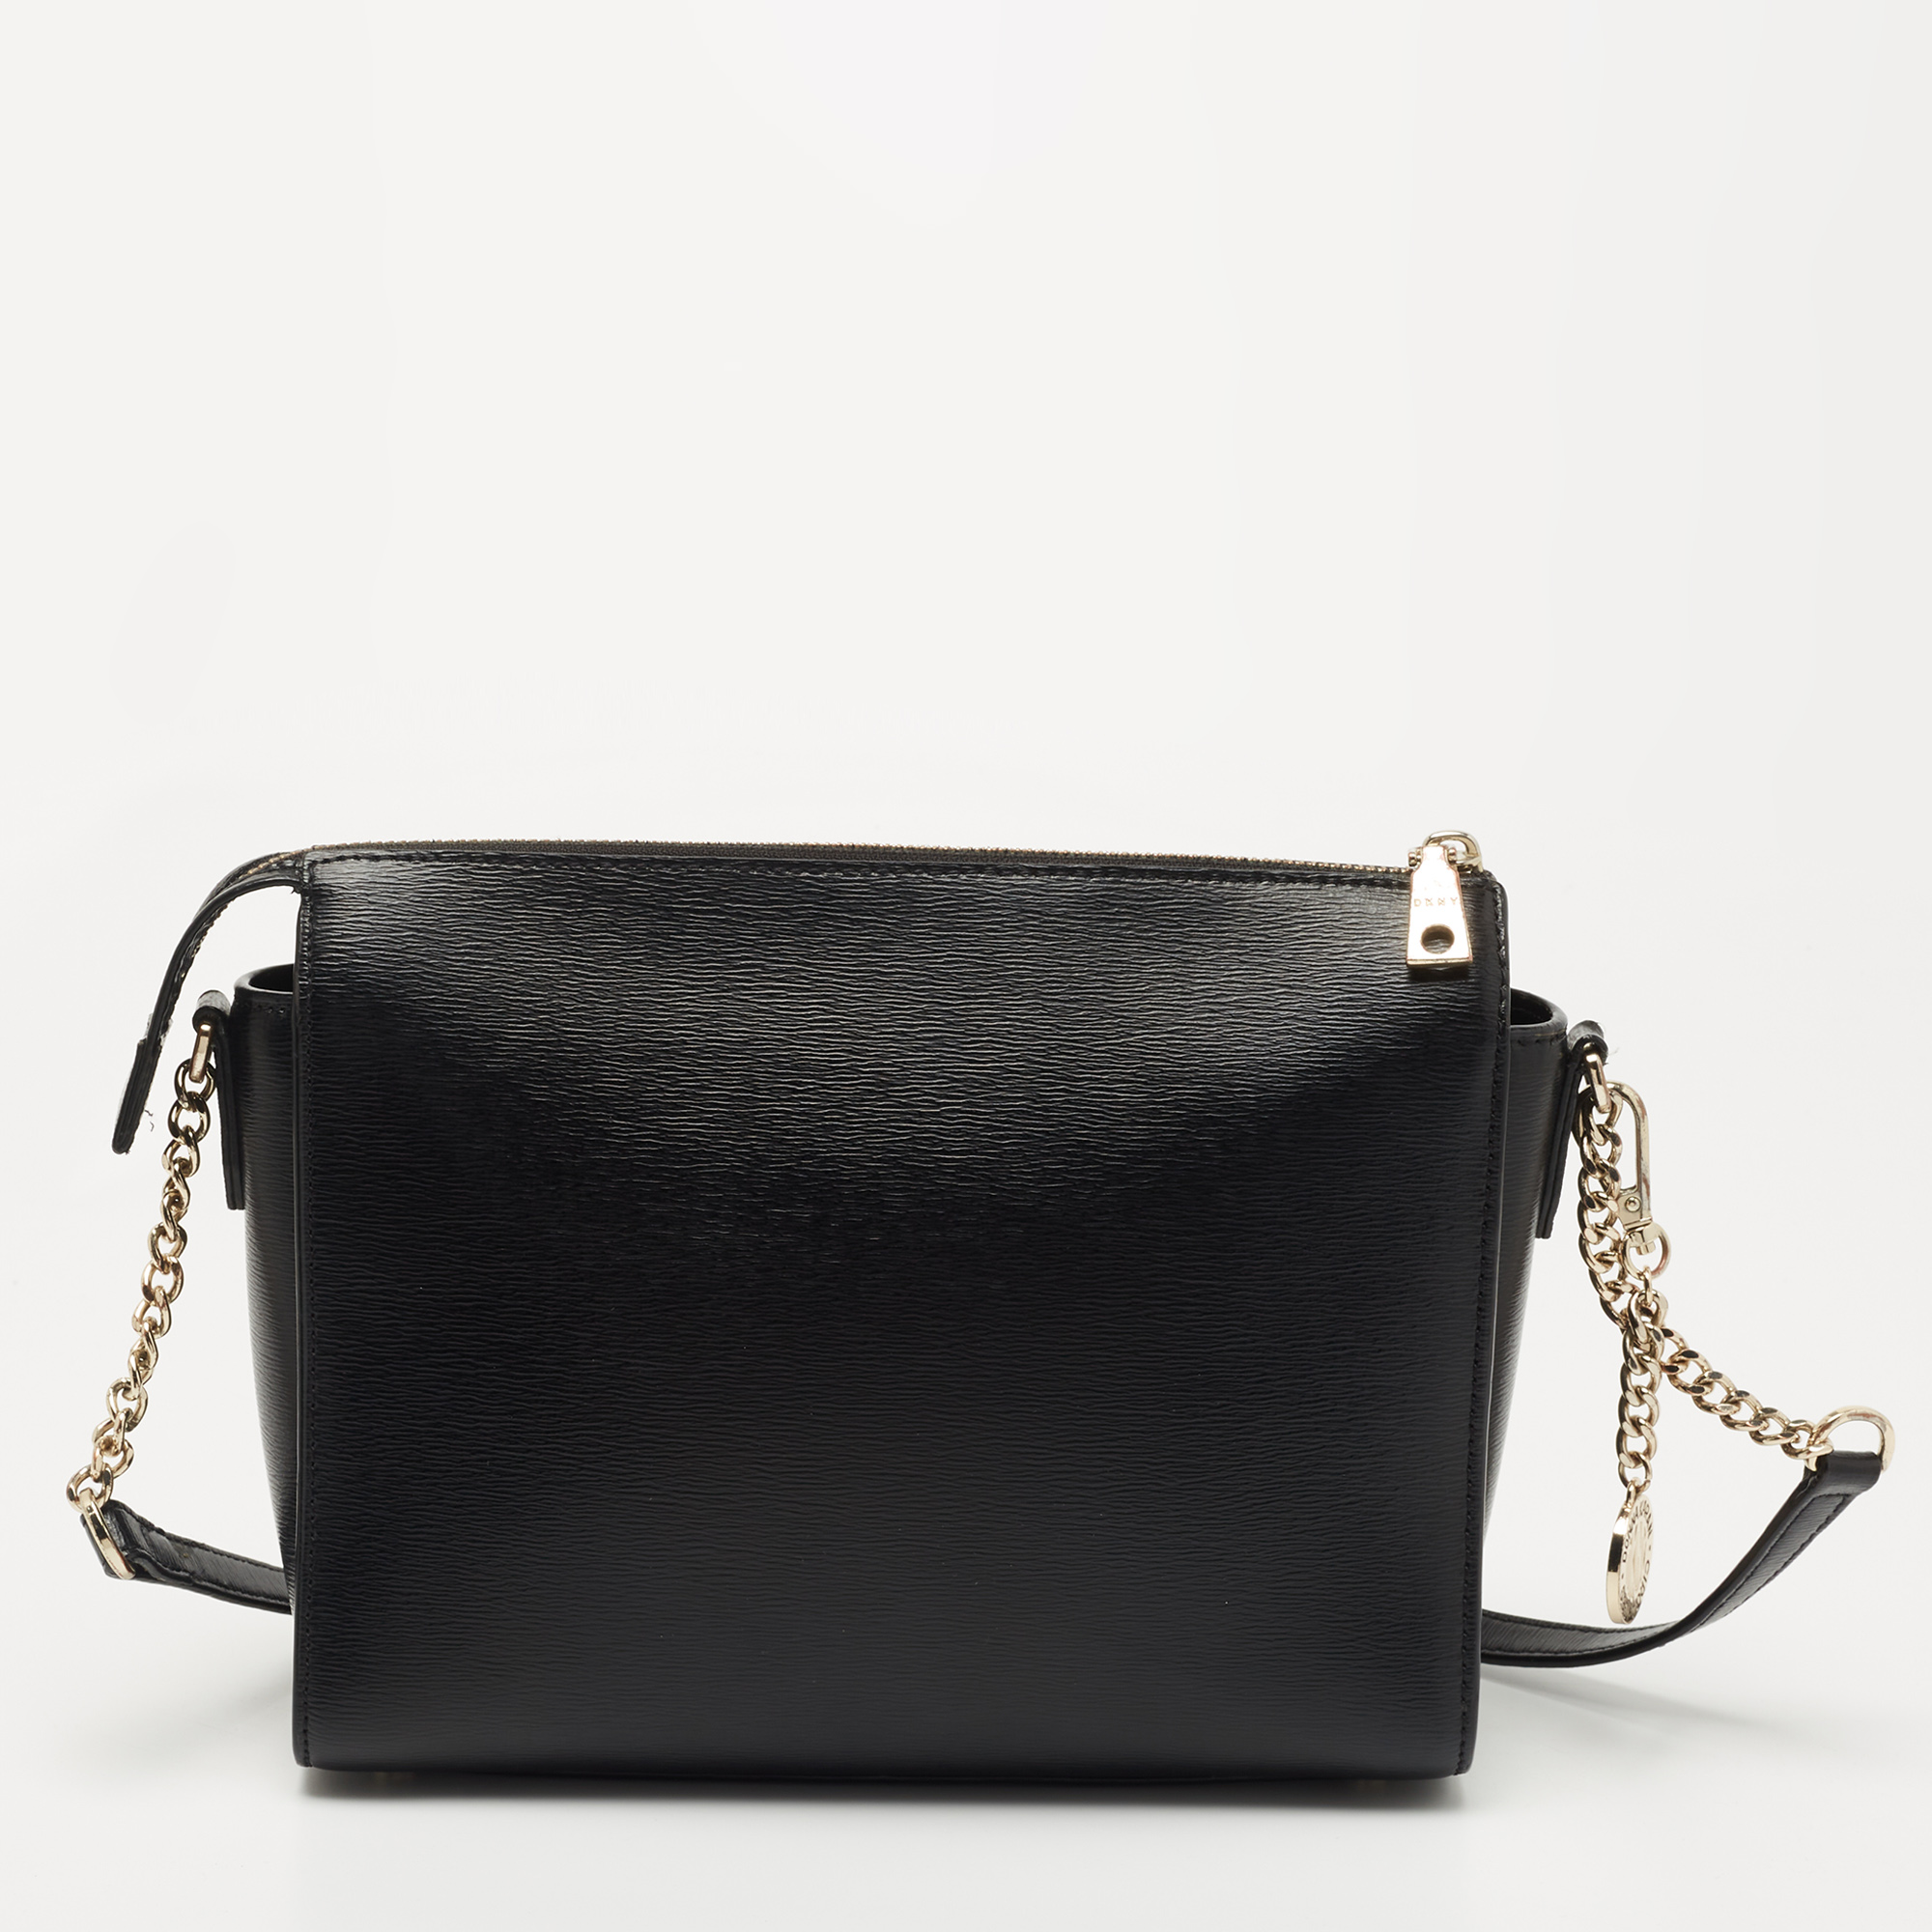 DKNY Black Leather Zip Crossbody Bag